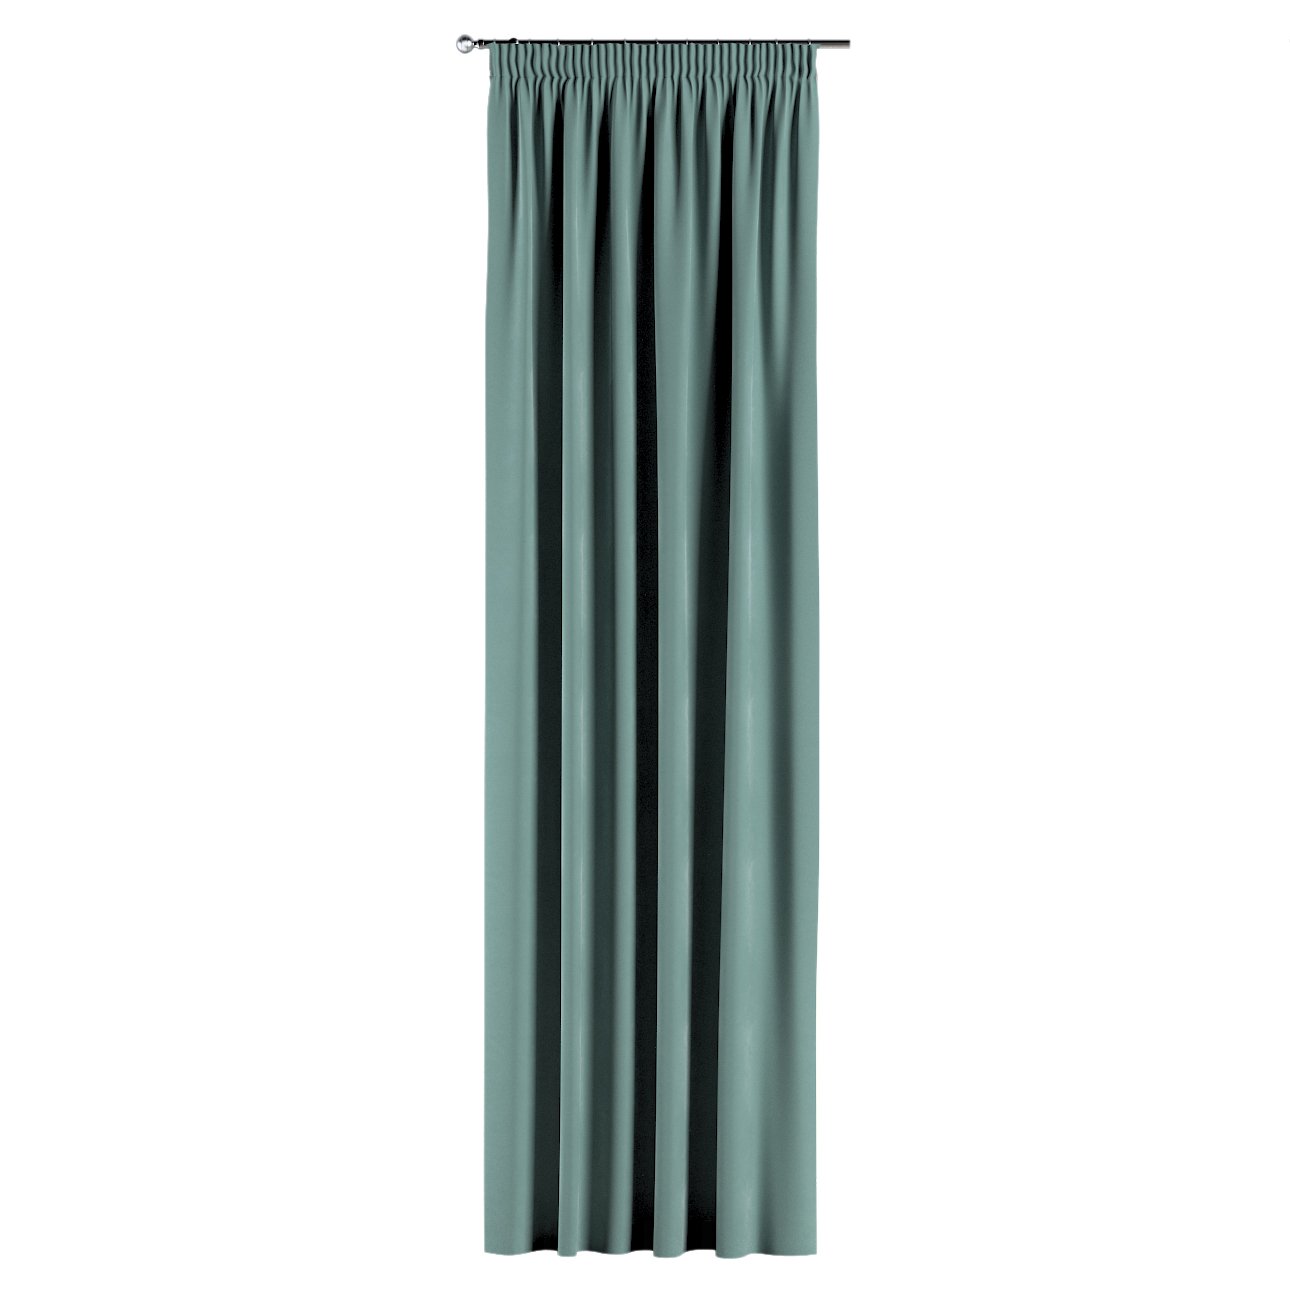 Vorhang mit Kräuselband, mintgrün, 704-18